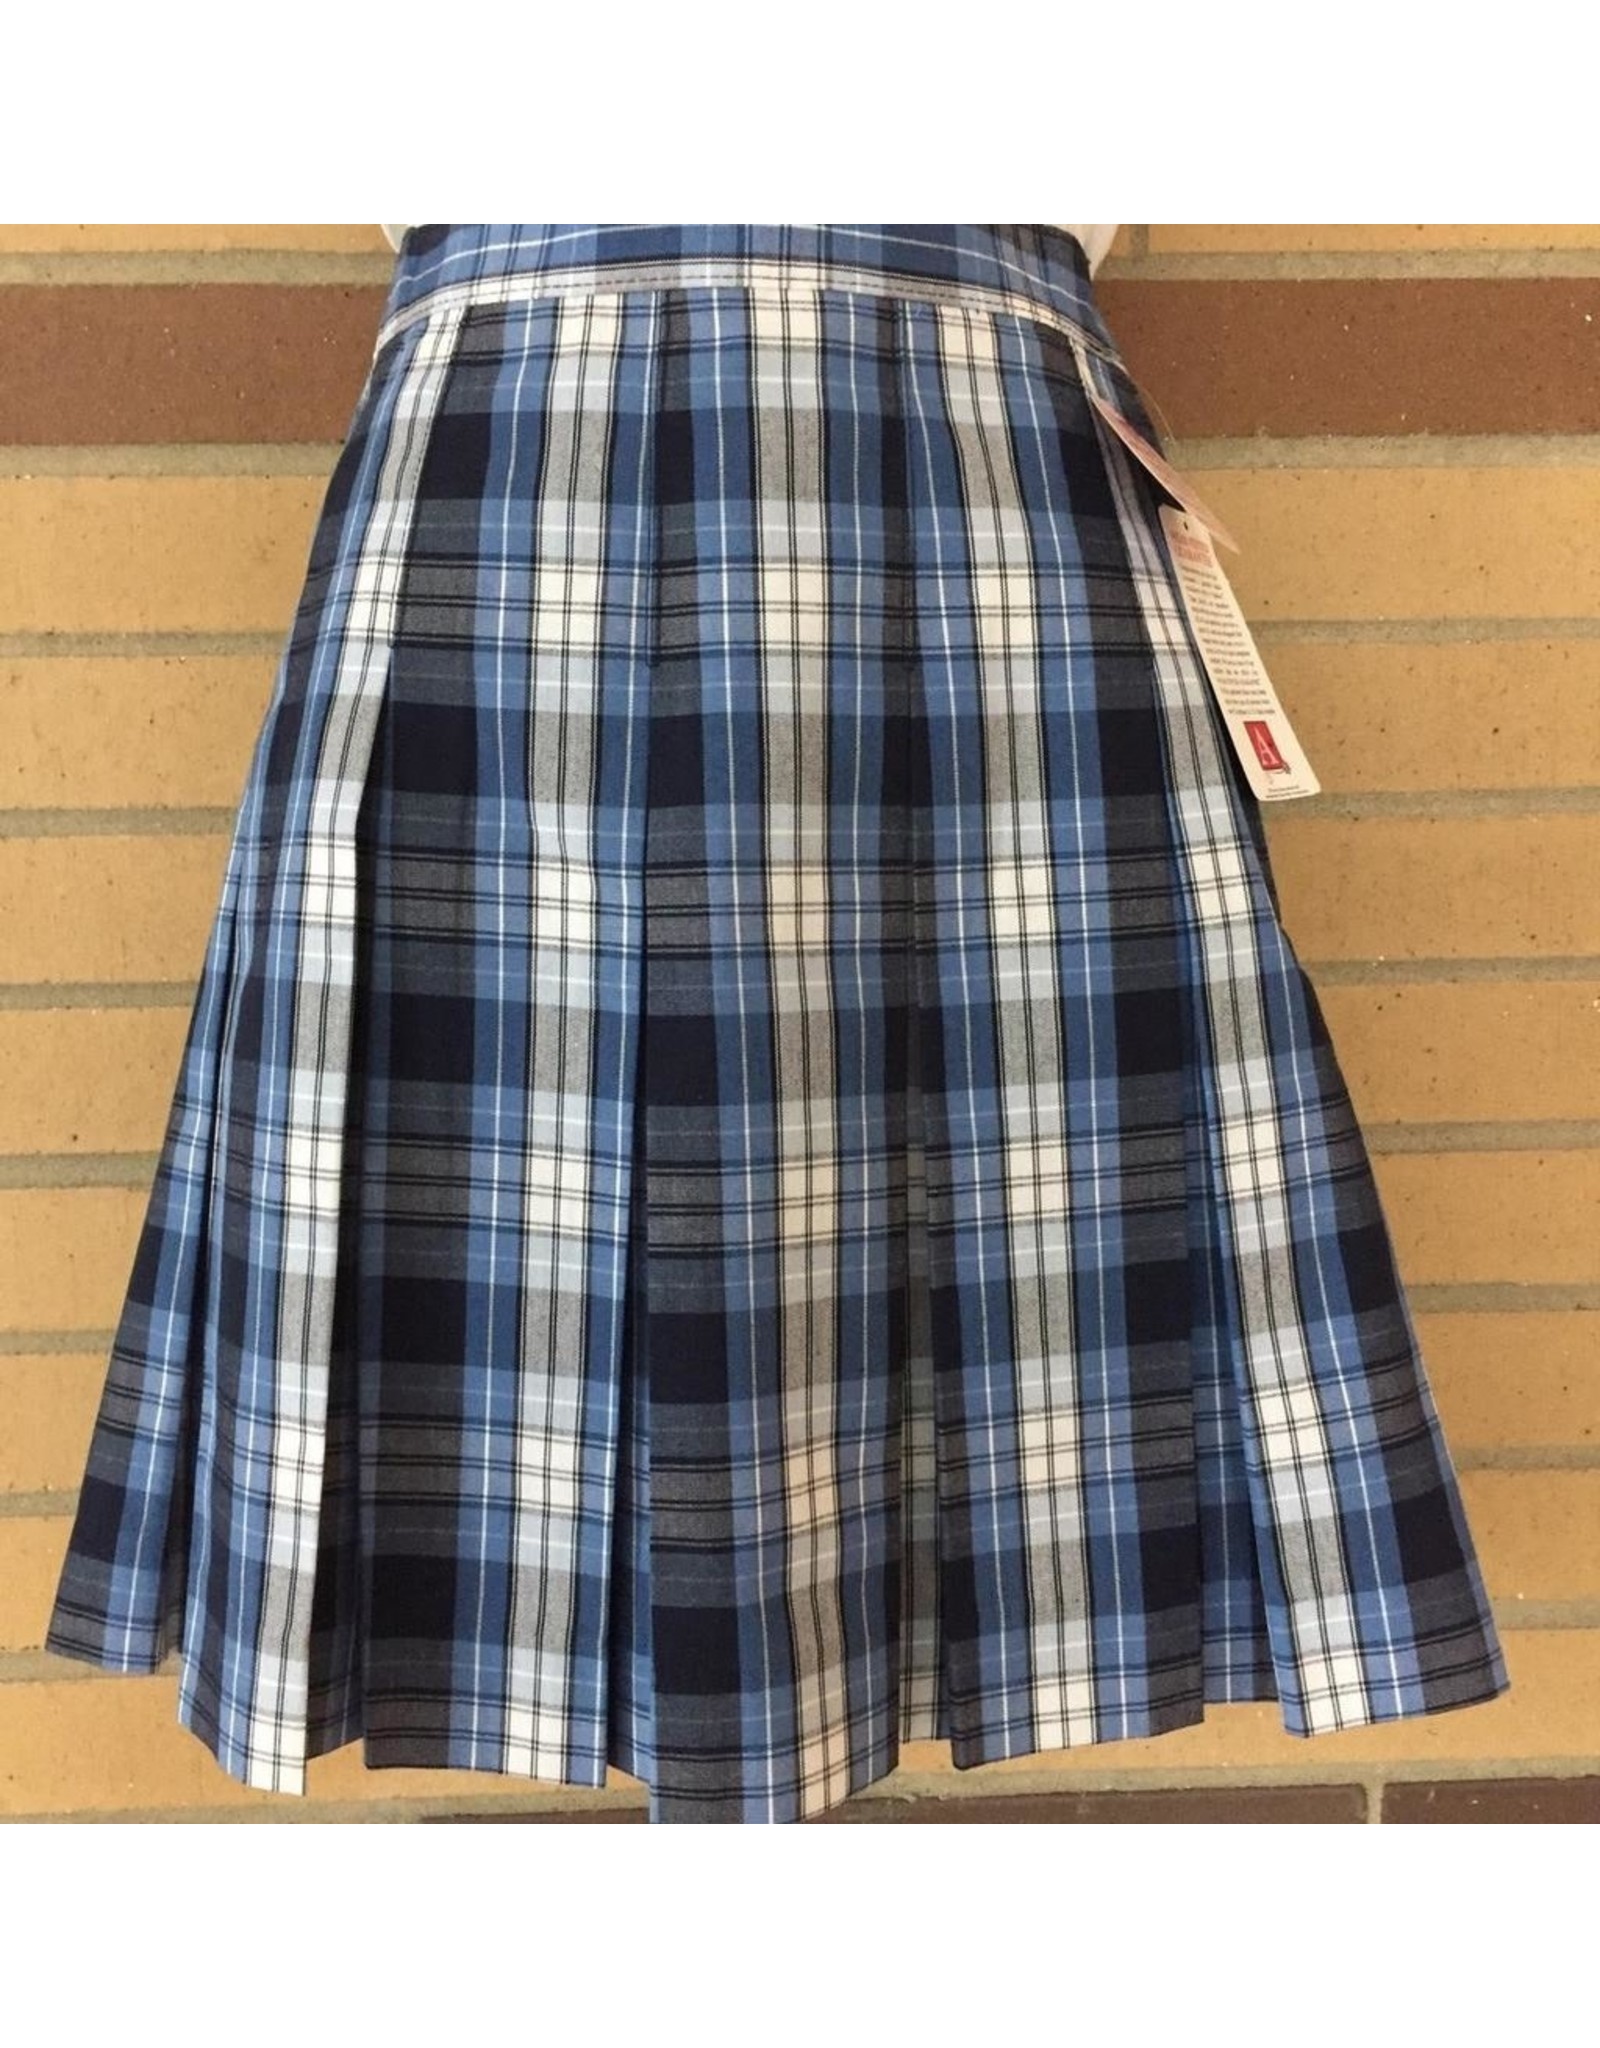 UNIFORM Saint Andrew Plaid Skirt, 4th-8th grade only